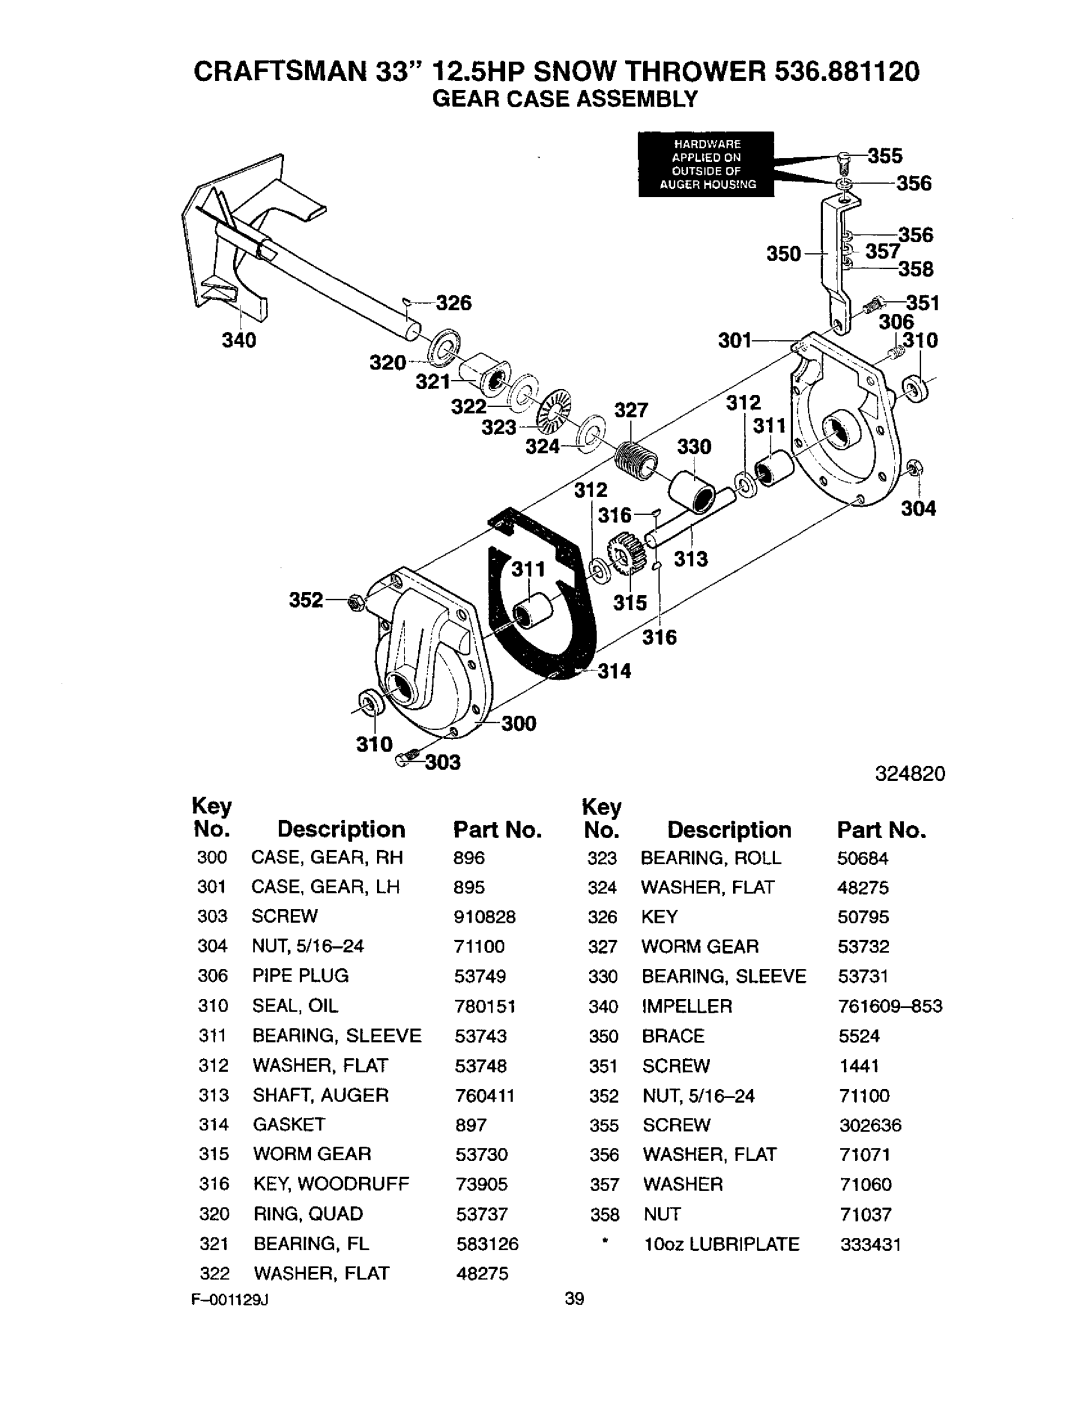 Craftsman 536.88112 operating instructions Gear Case Assembly, Key Description, 306 340 321 327 330 304 316, 310 